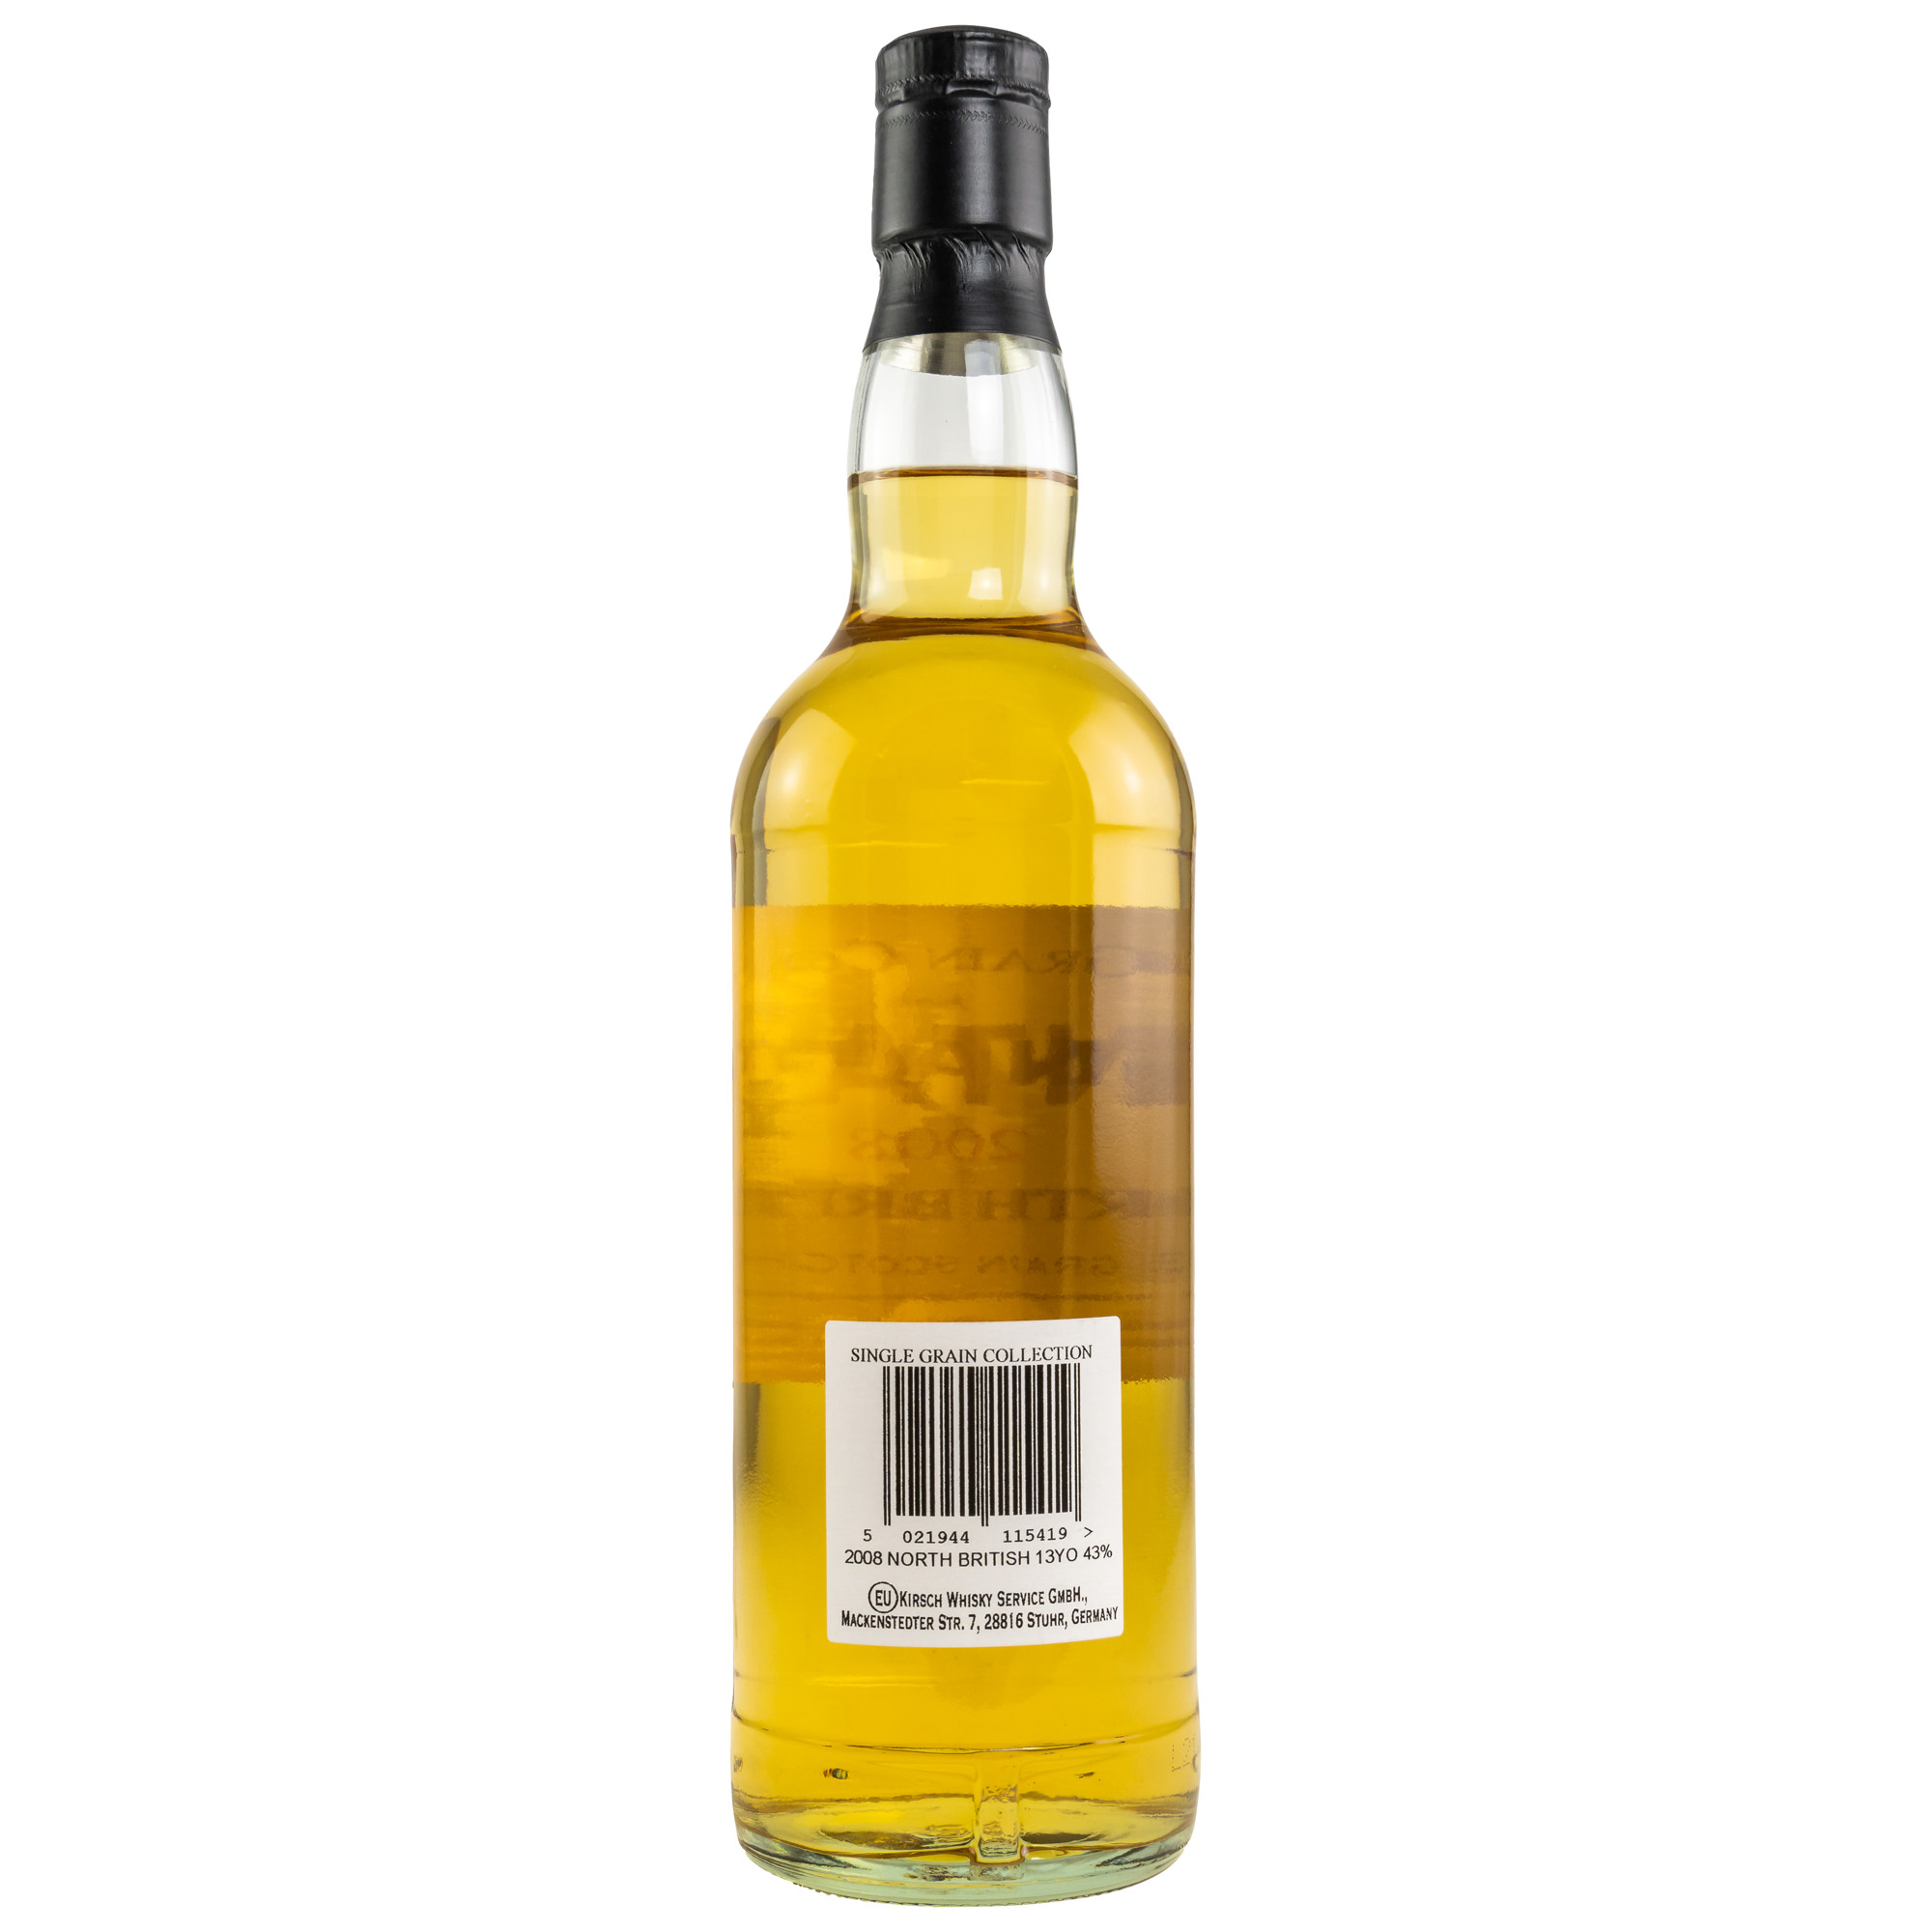 North British 13 Jahre (2008-2021) Single Grain Whisky, 43% 0,7 ltr. Signatory Vintage